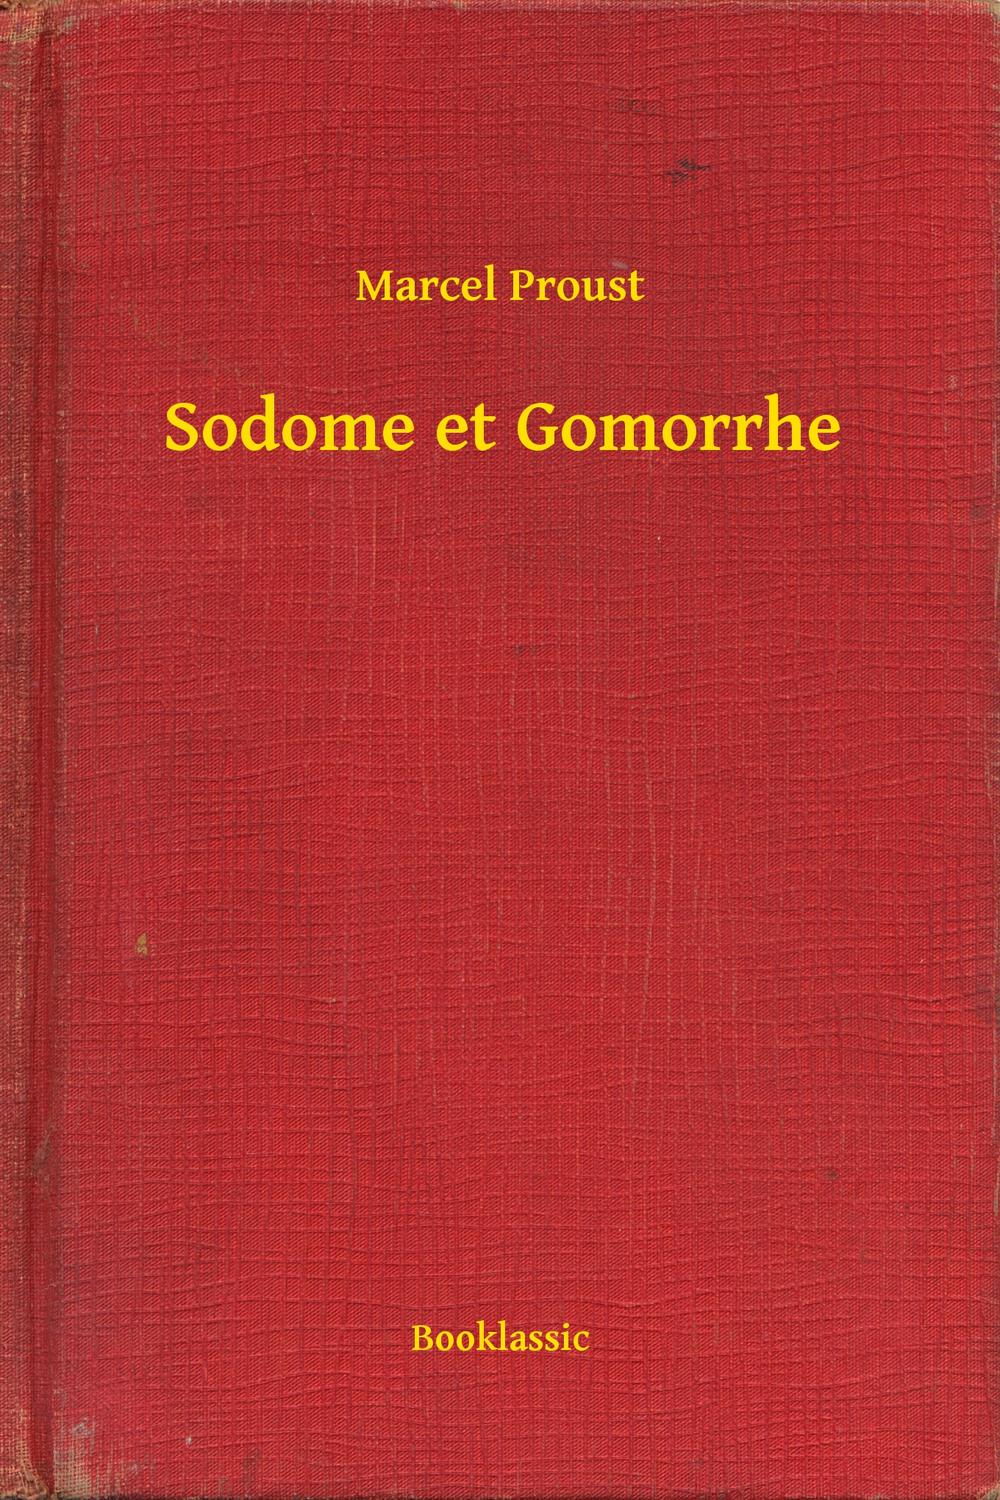 Sodome et Gomorrhe - Marcel Proust,,